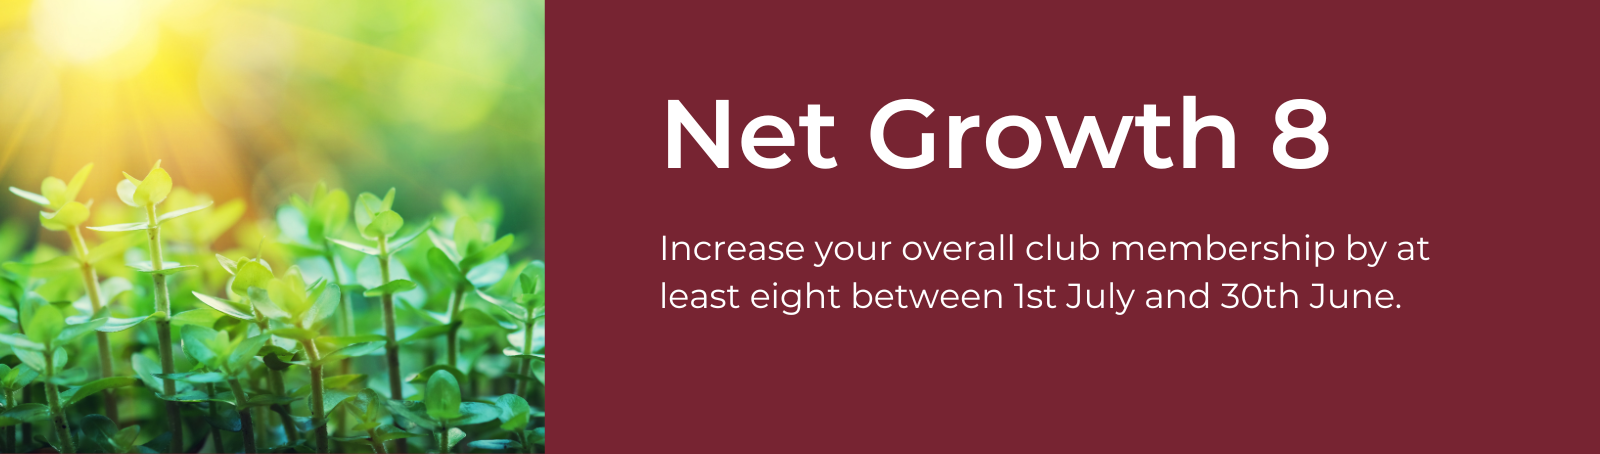 Net Growth 8